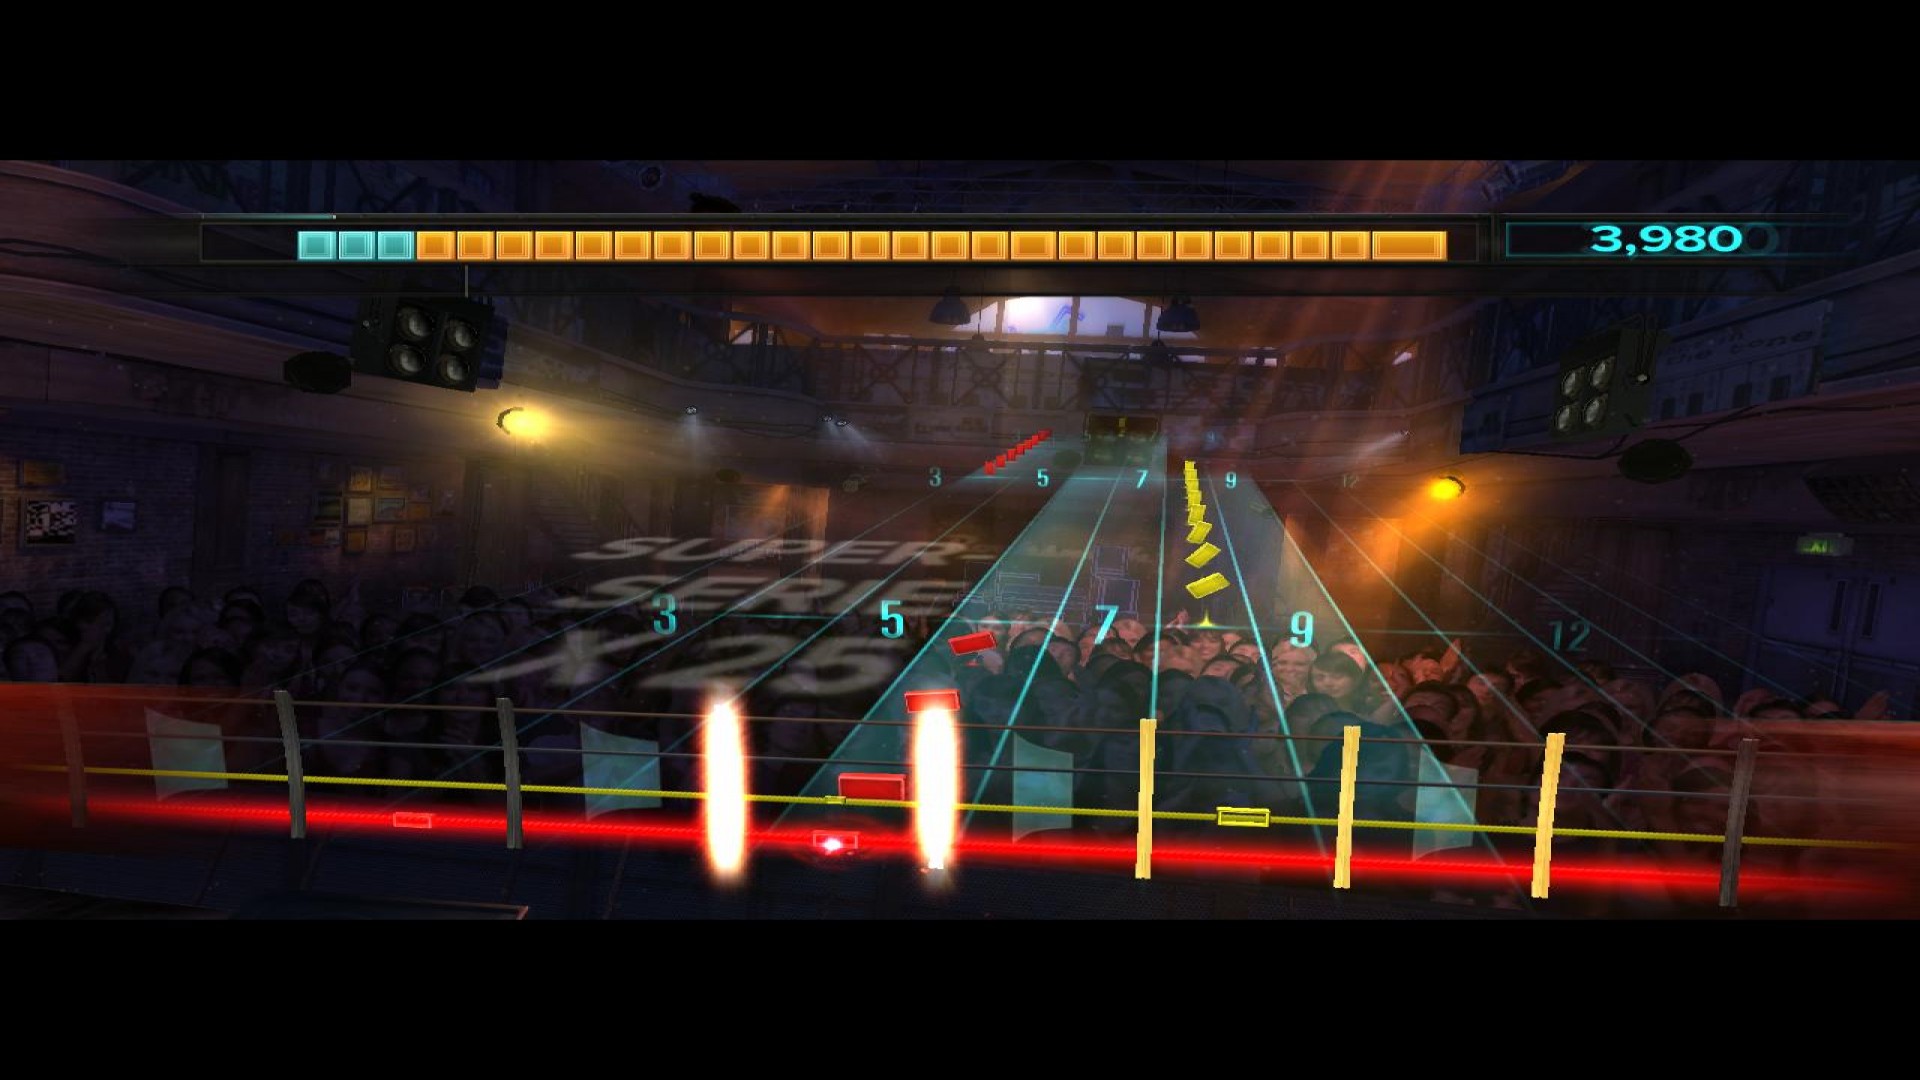 Rocksmith - The Offspring - Gone Away screenshot